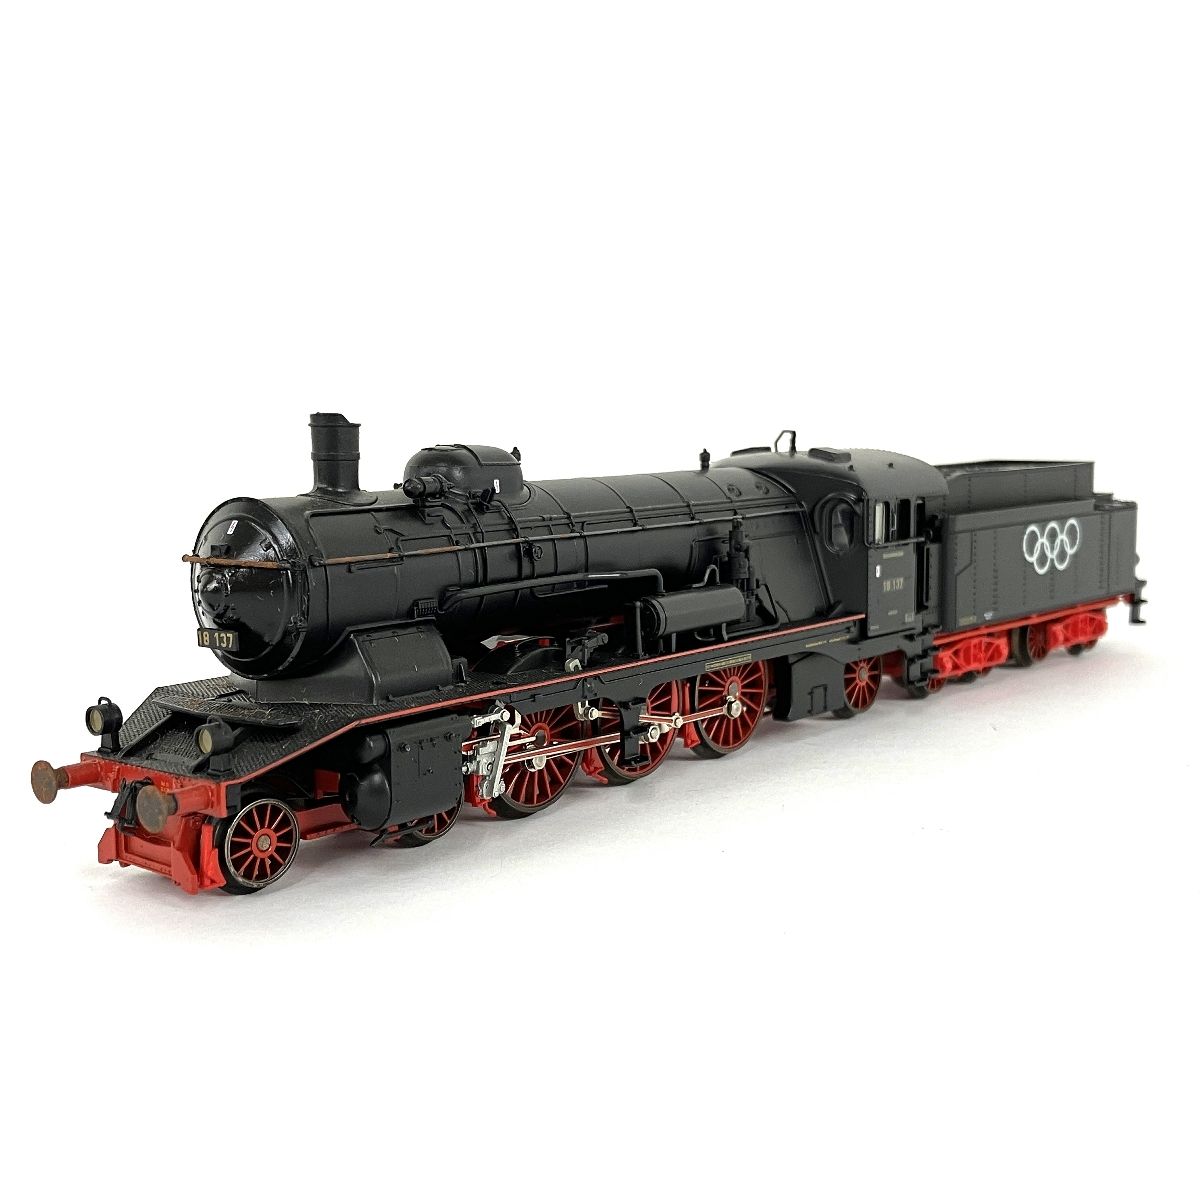 Marklin メルクリン 18 137 HOゲージ 蒸気機関車 鉄道模型 ジャンク 